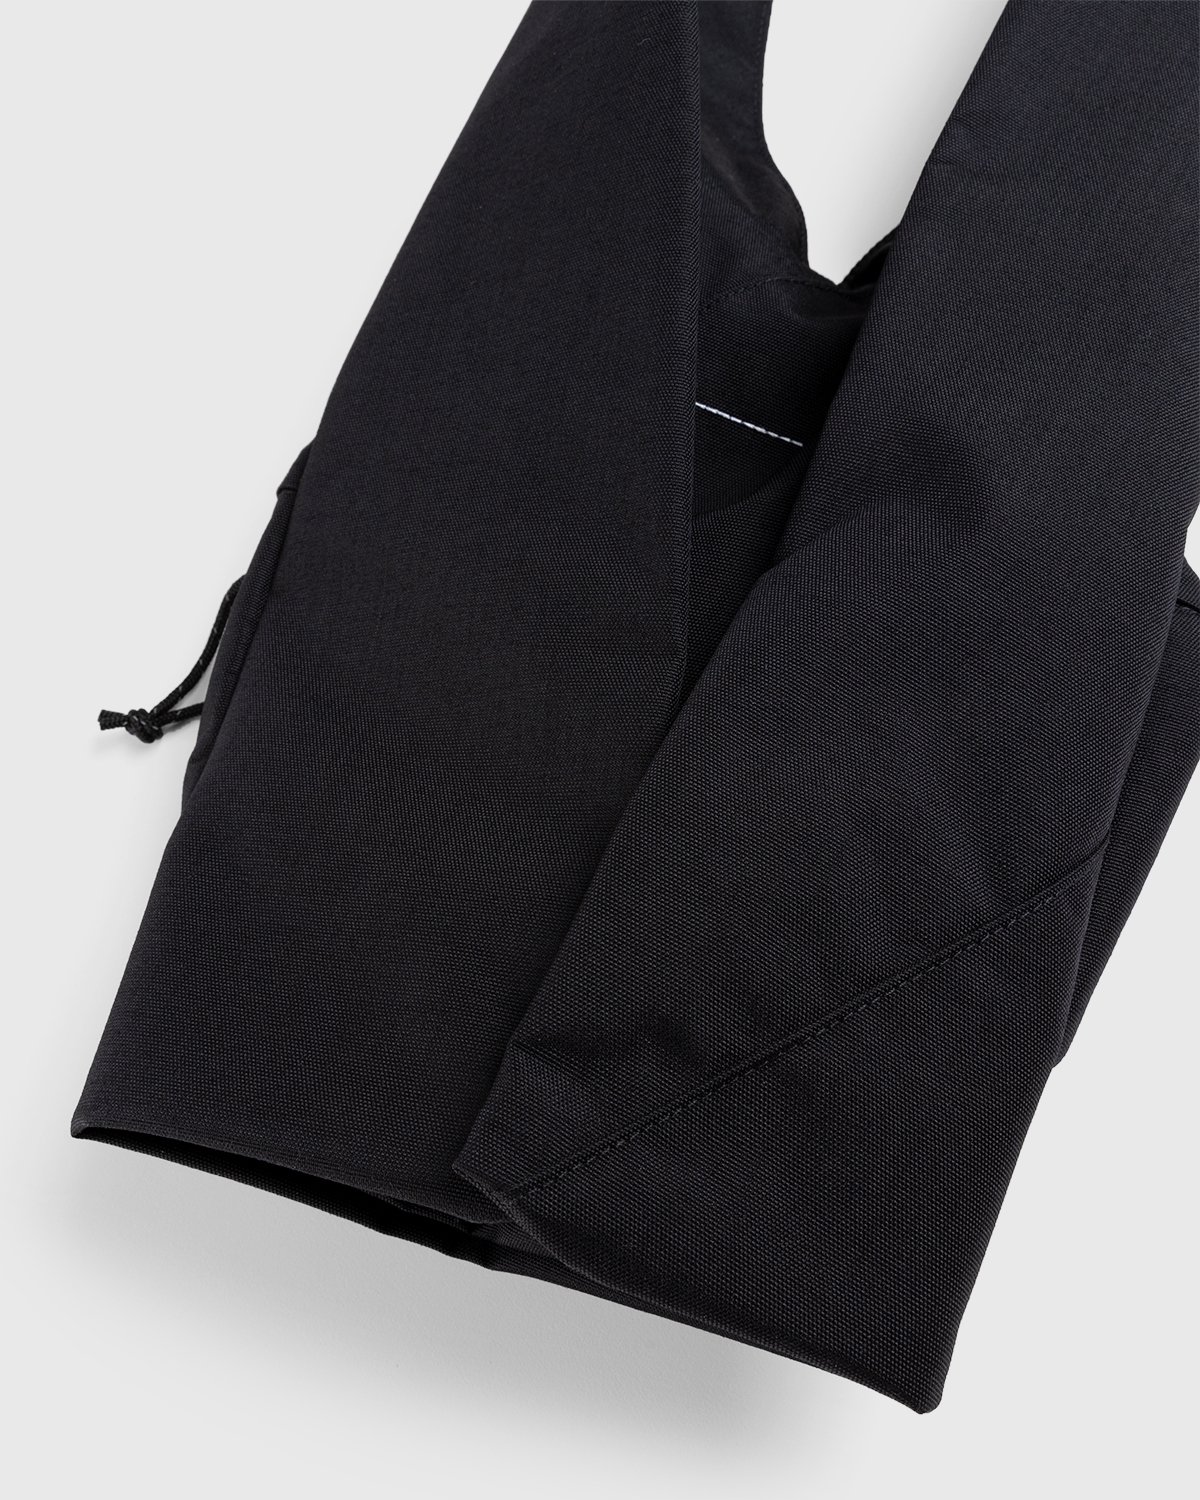 MM6 Maison Margiela x Eastpak - Borsa Shopping Bag Black - Accessories - Black - Image 6